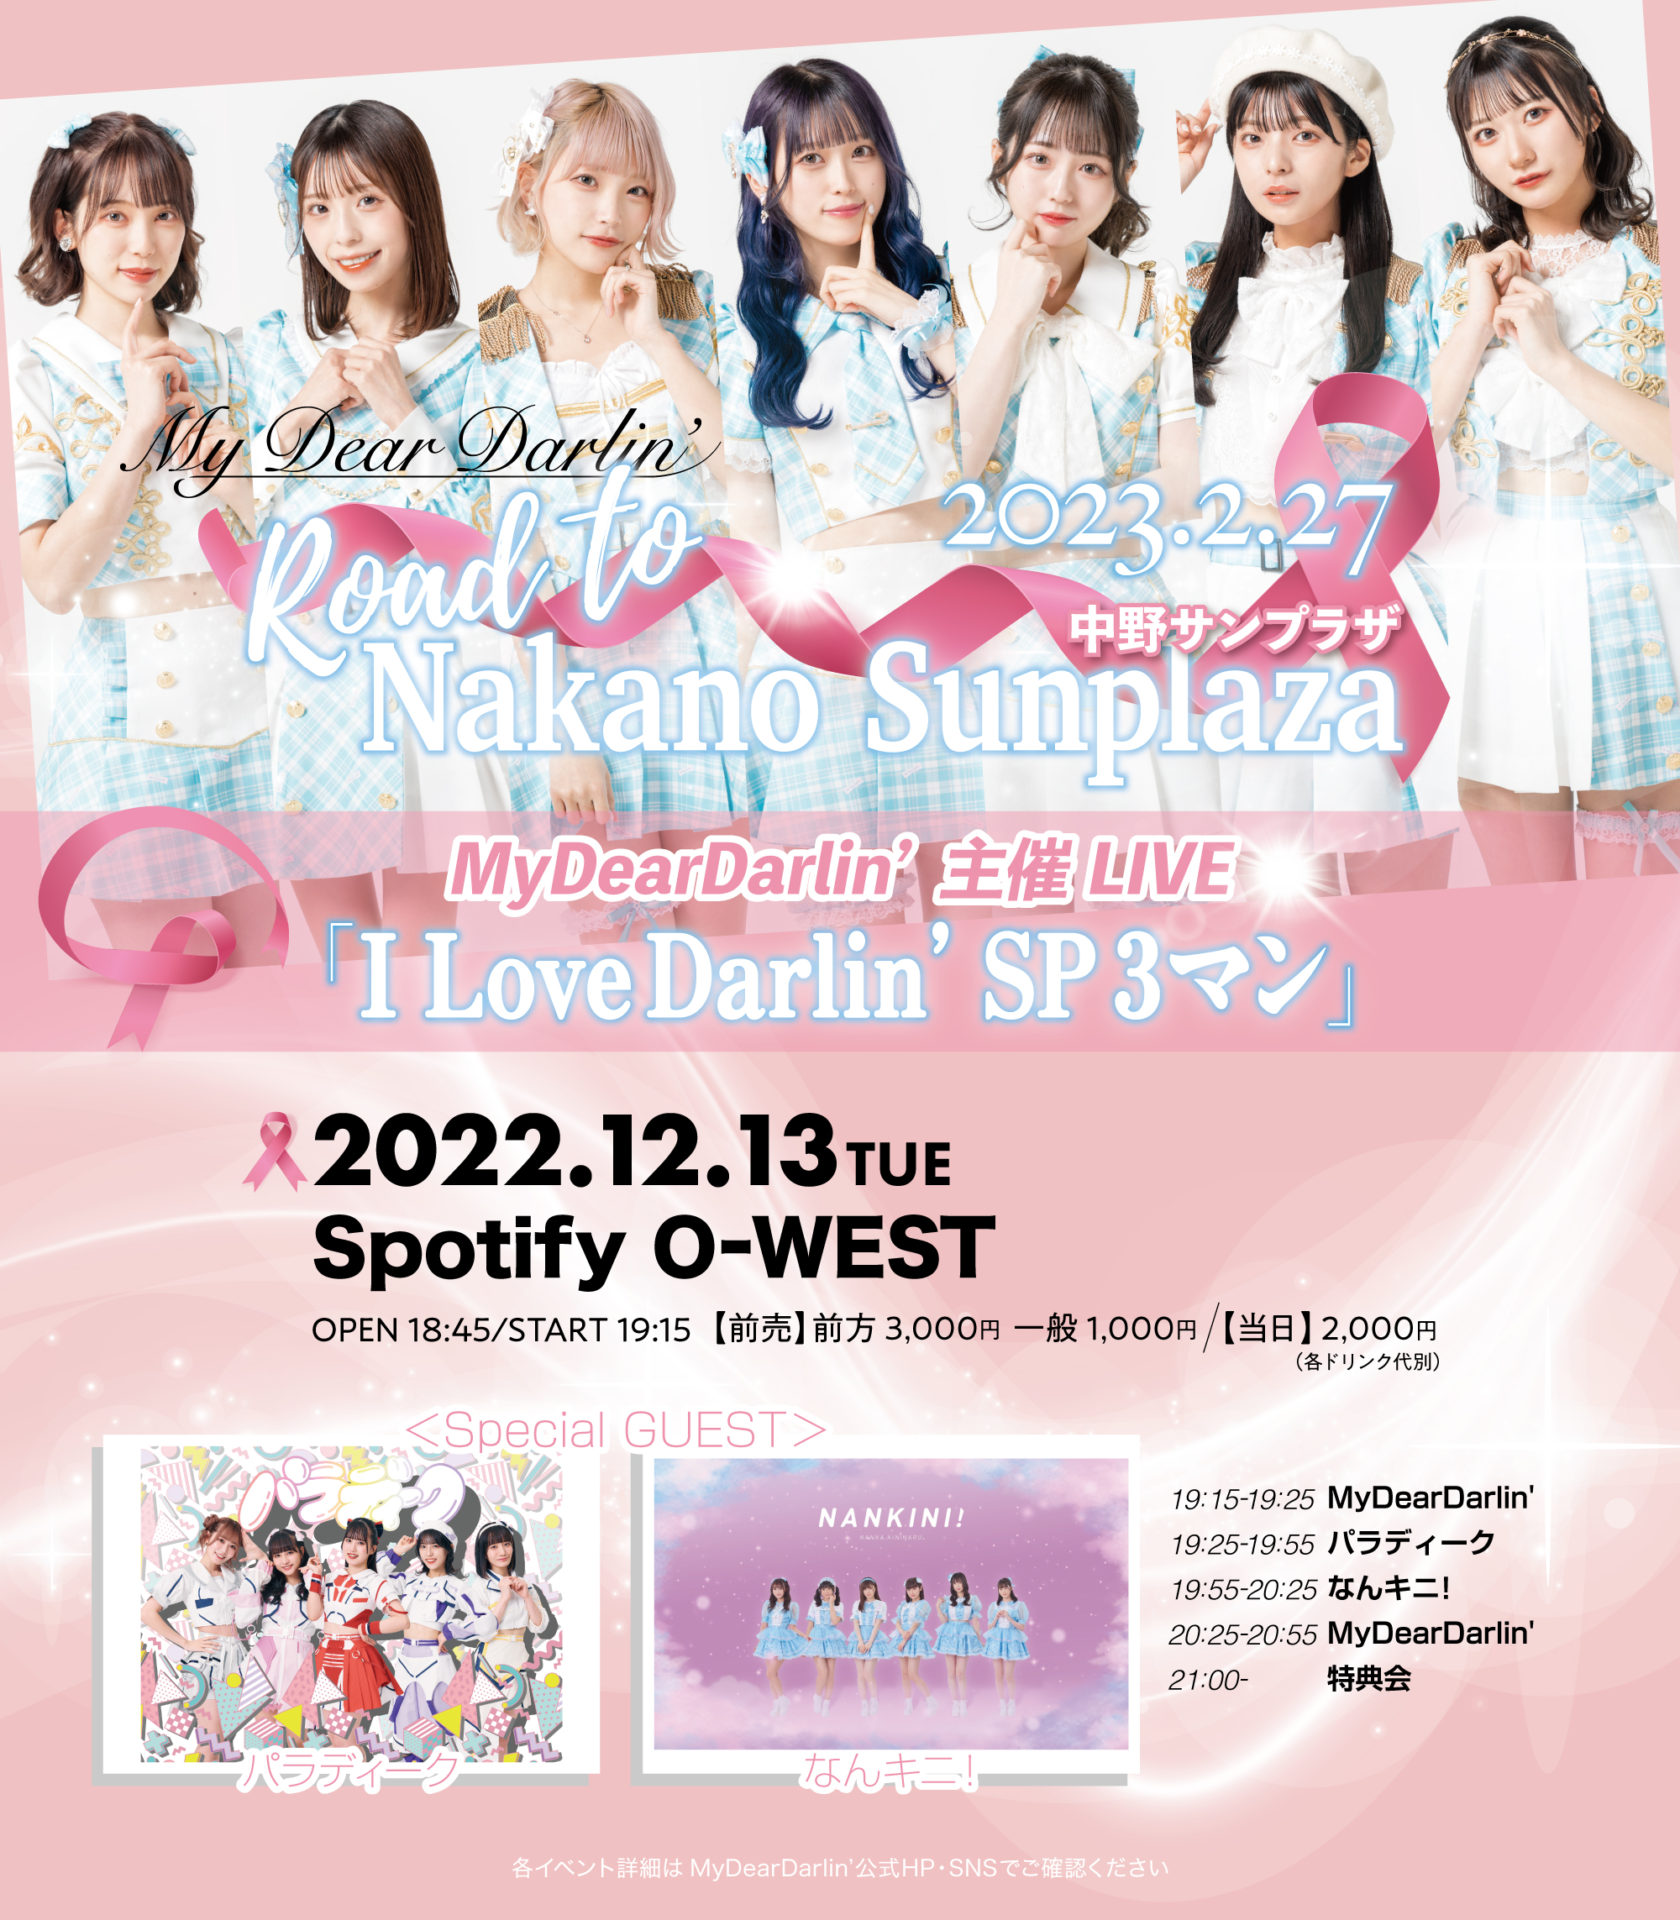 -2023.2.27 Road to 中野サンプラザホール- MyDearDarlin’主催LIVE 【I Love Darlin’ SP3マン】